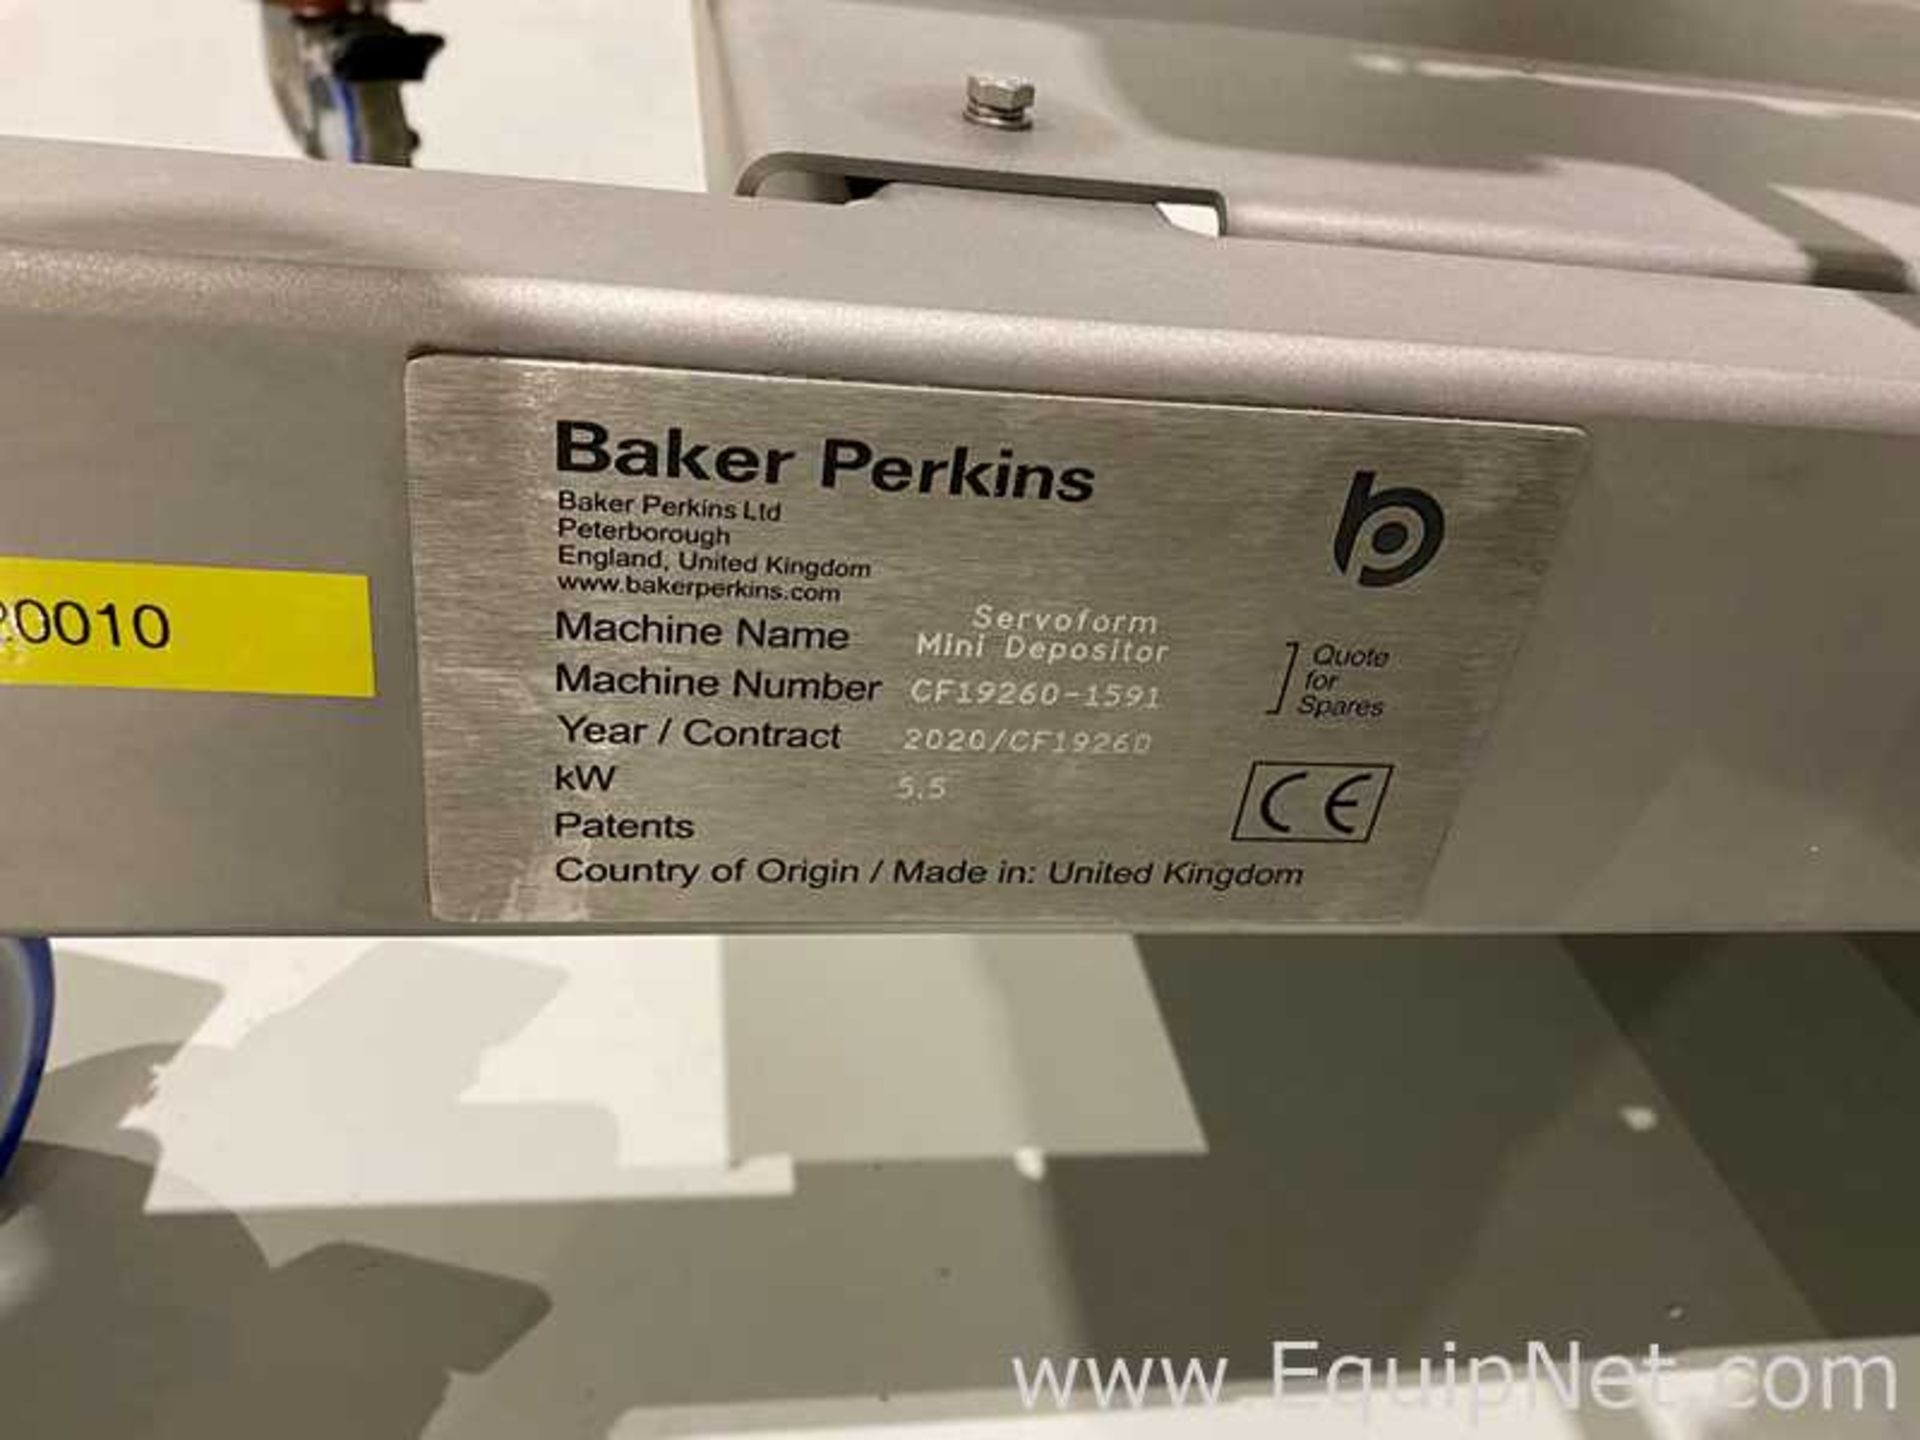 Baker Perkins Ltd Servoform Mini Depositor - Image 2 of 12